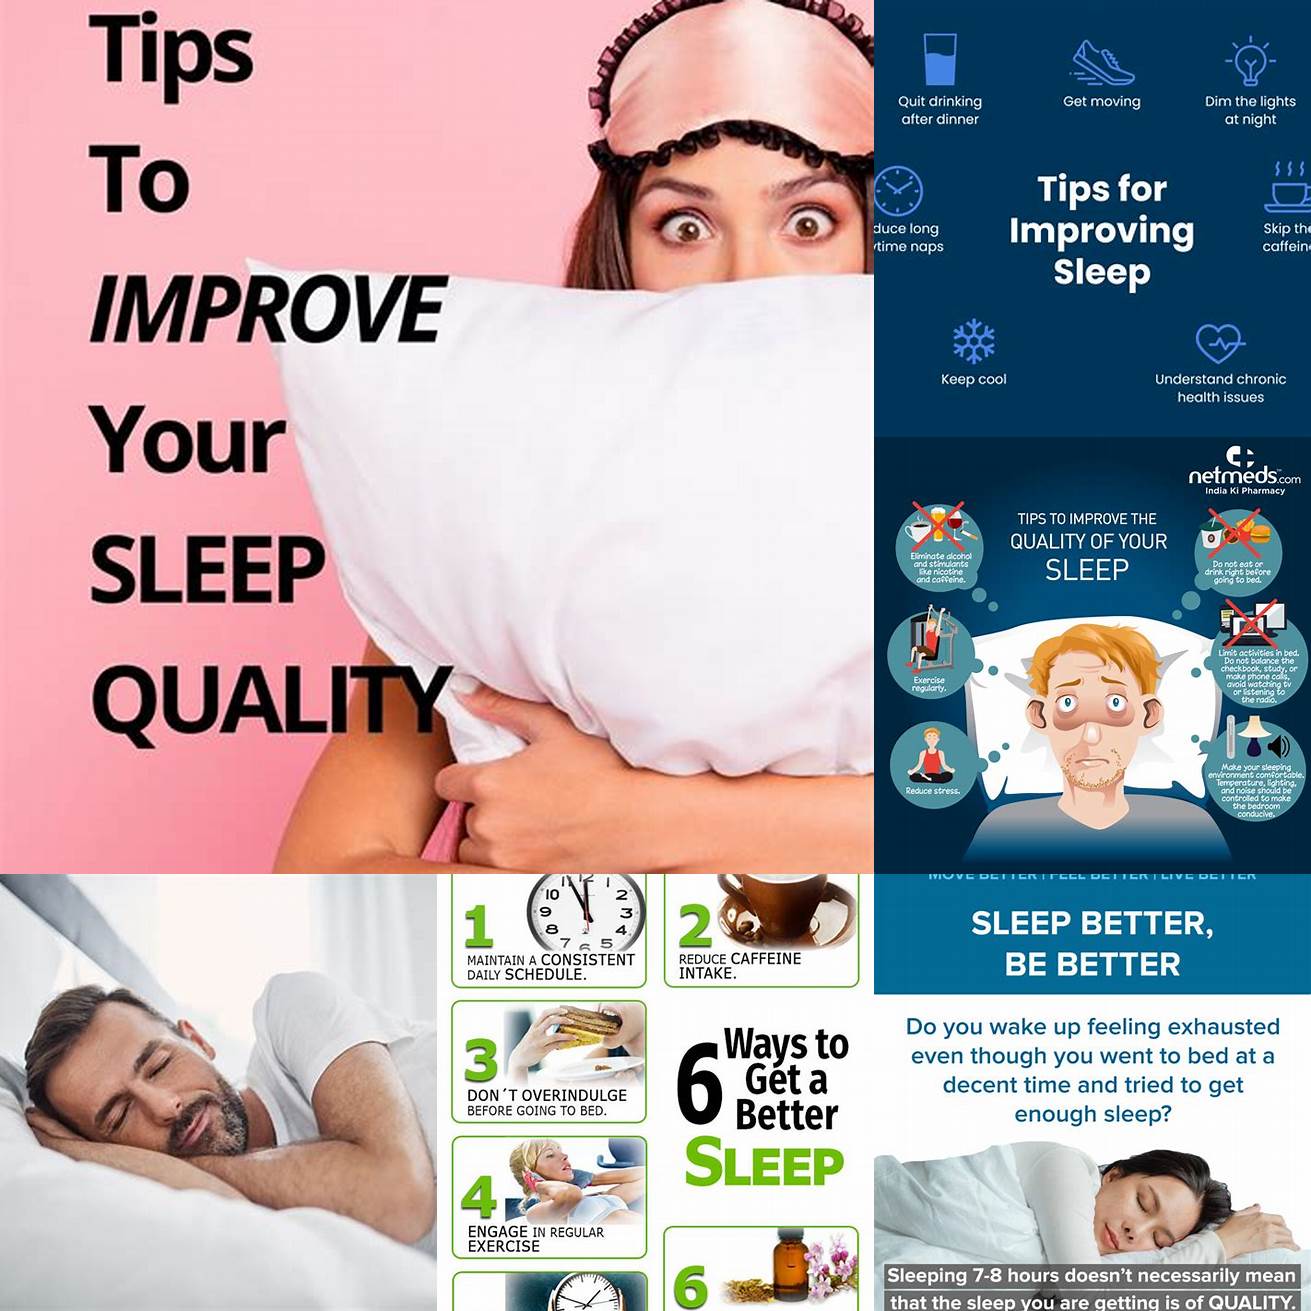 Improved sleep quality